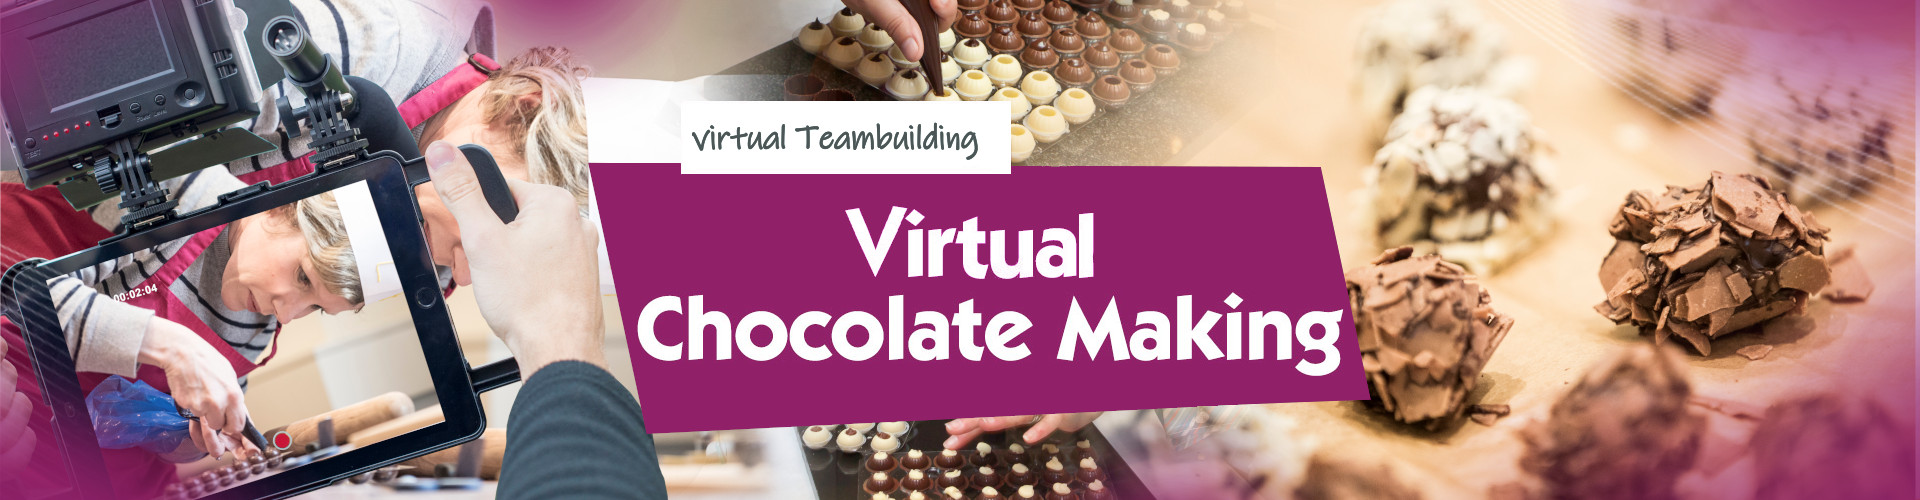 Virtual-Chocolate-Making-Banner